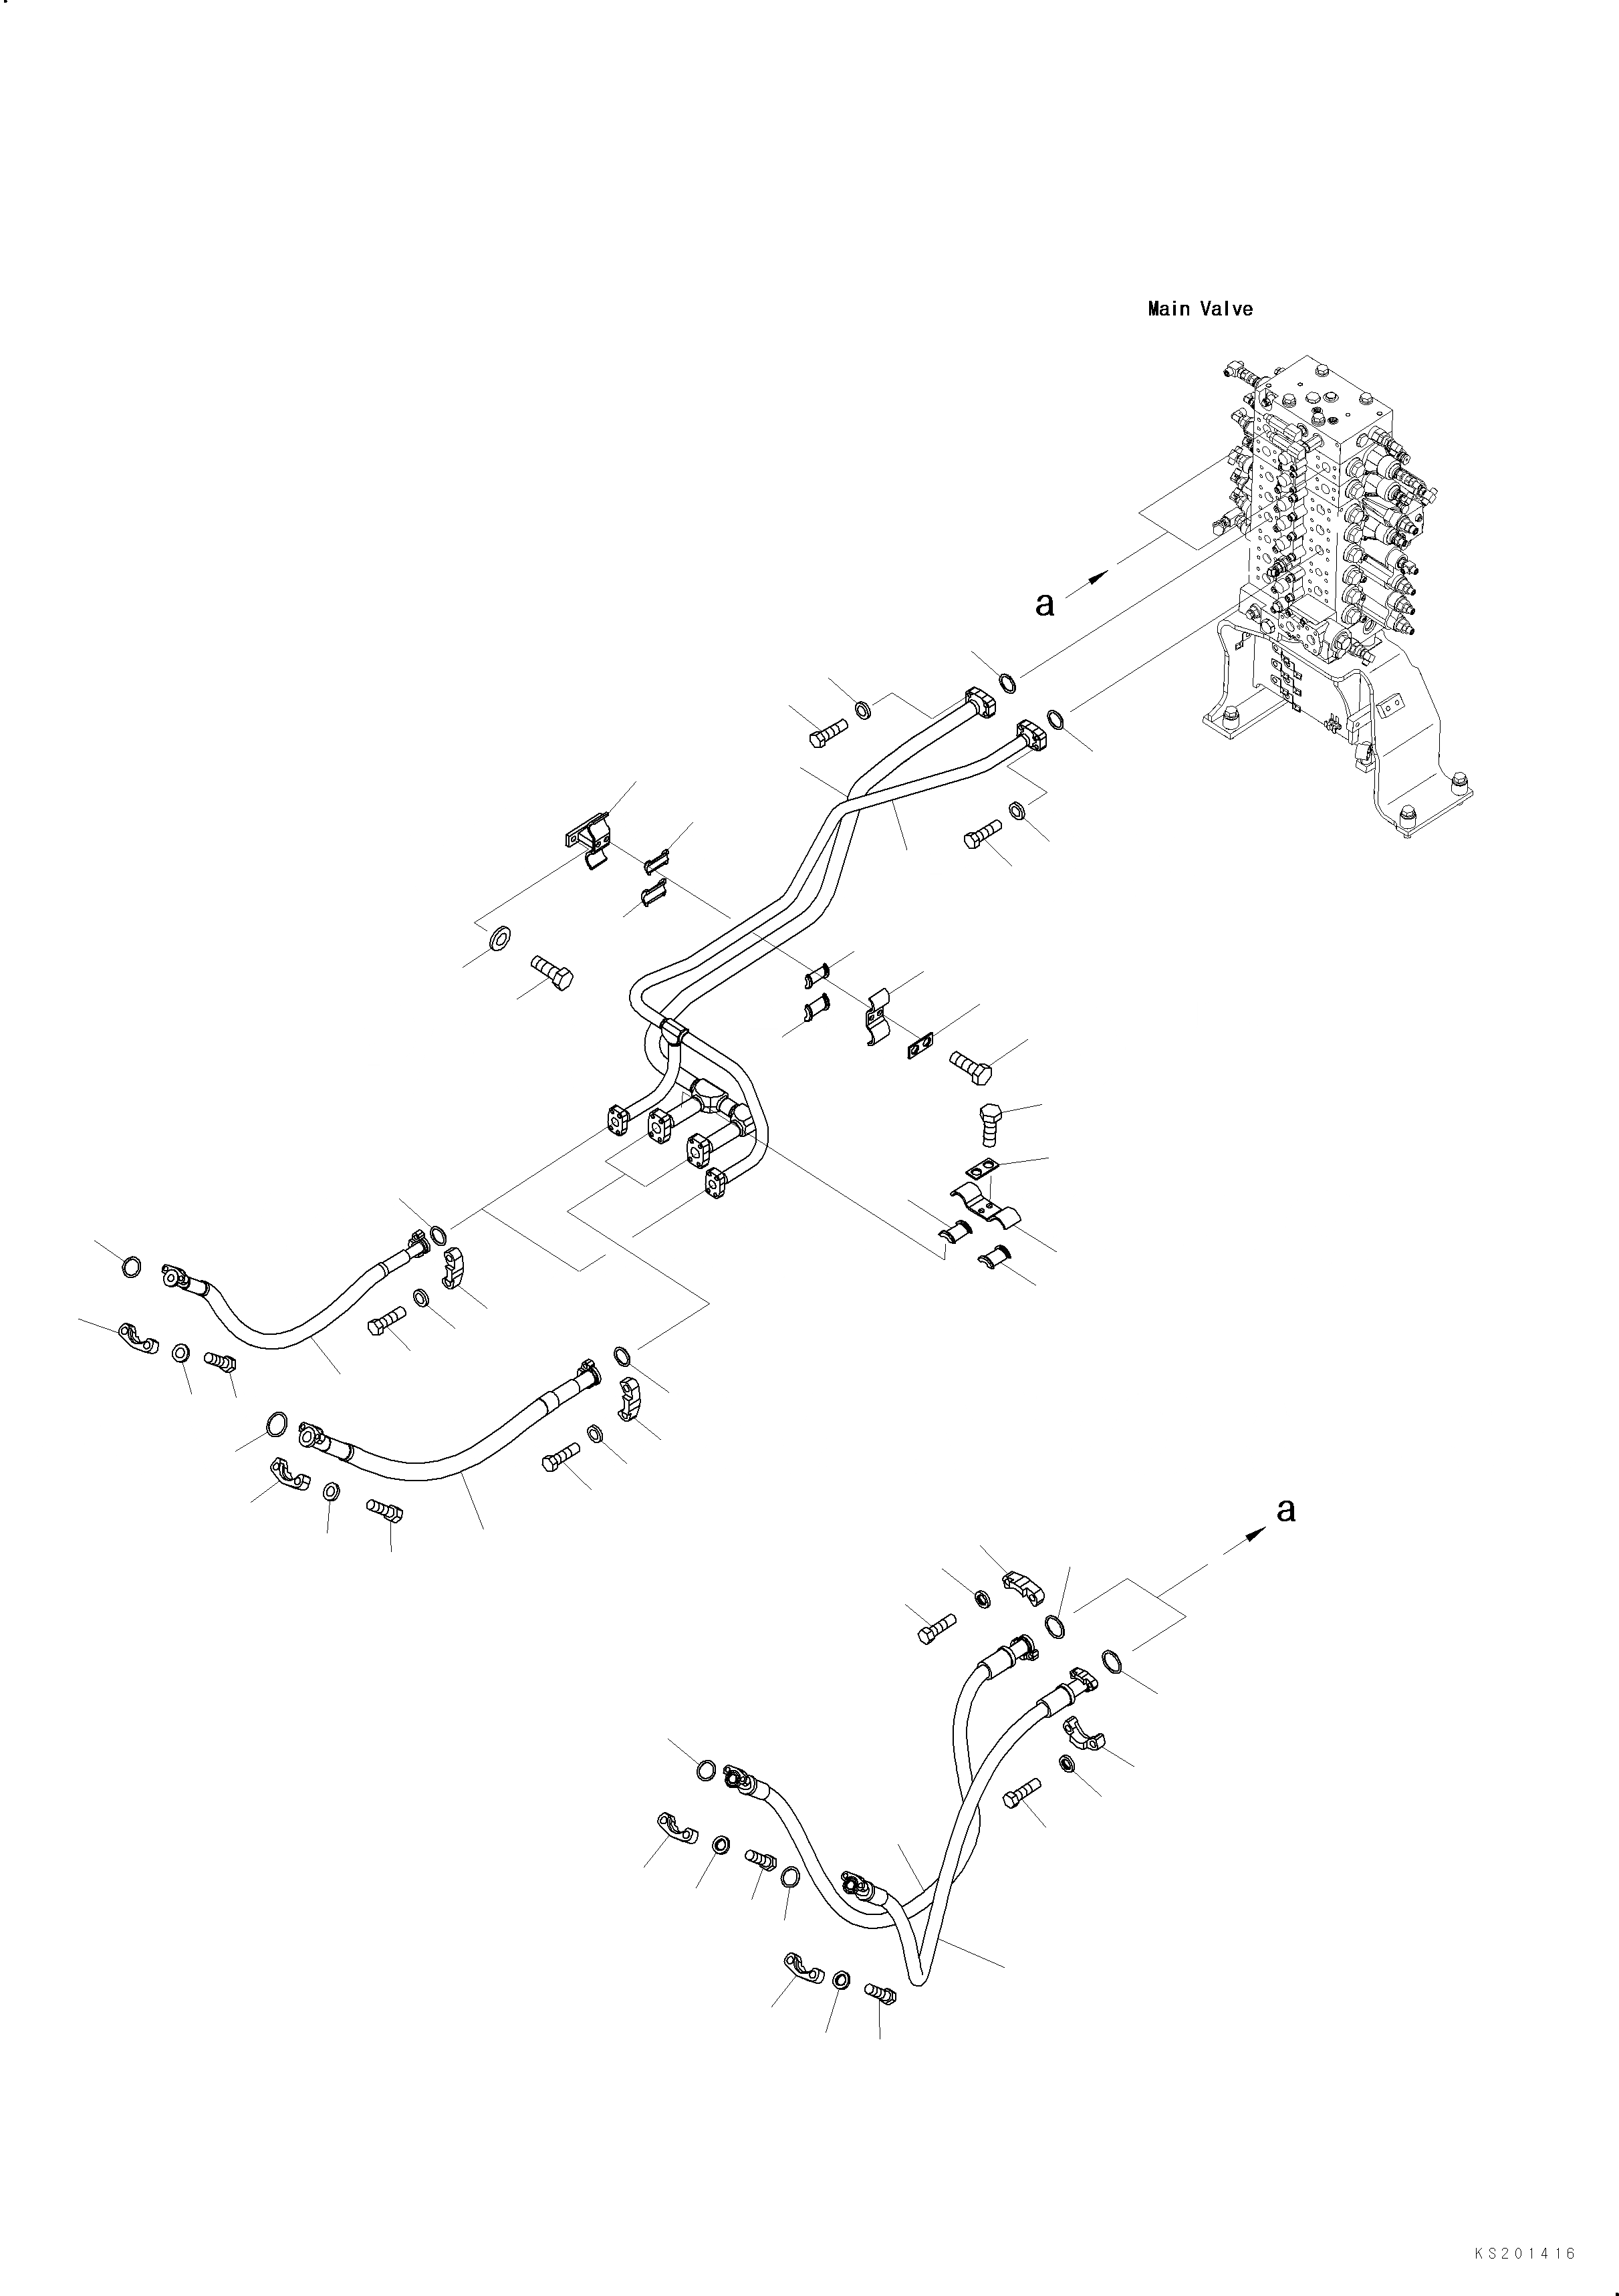 Схема запчастей Komatsu PC240LC-10 - ГИДРОЛИНИЯ СТРЕЛЫ, ДЛЯ 2-СЕКЦИОНН. СТРЕЛЫ ТРУБЫ СТРЕЛЫ, ДЛЯ 2-СЕКЦИОНН. СТРЕЛЫ